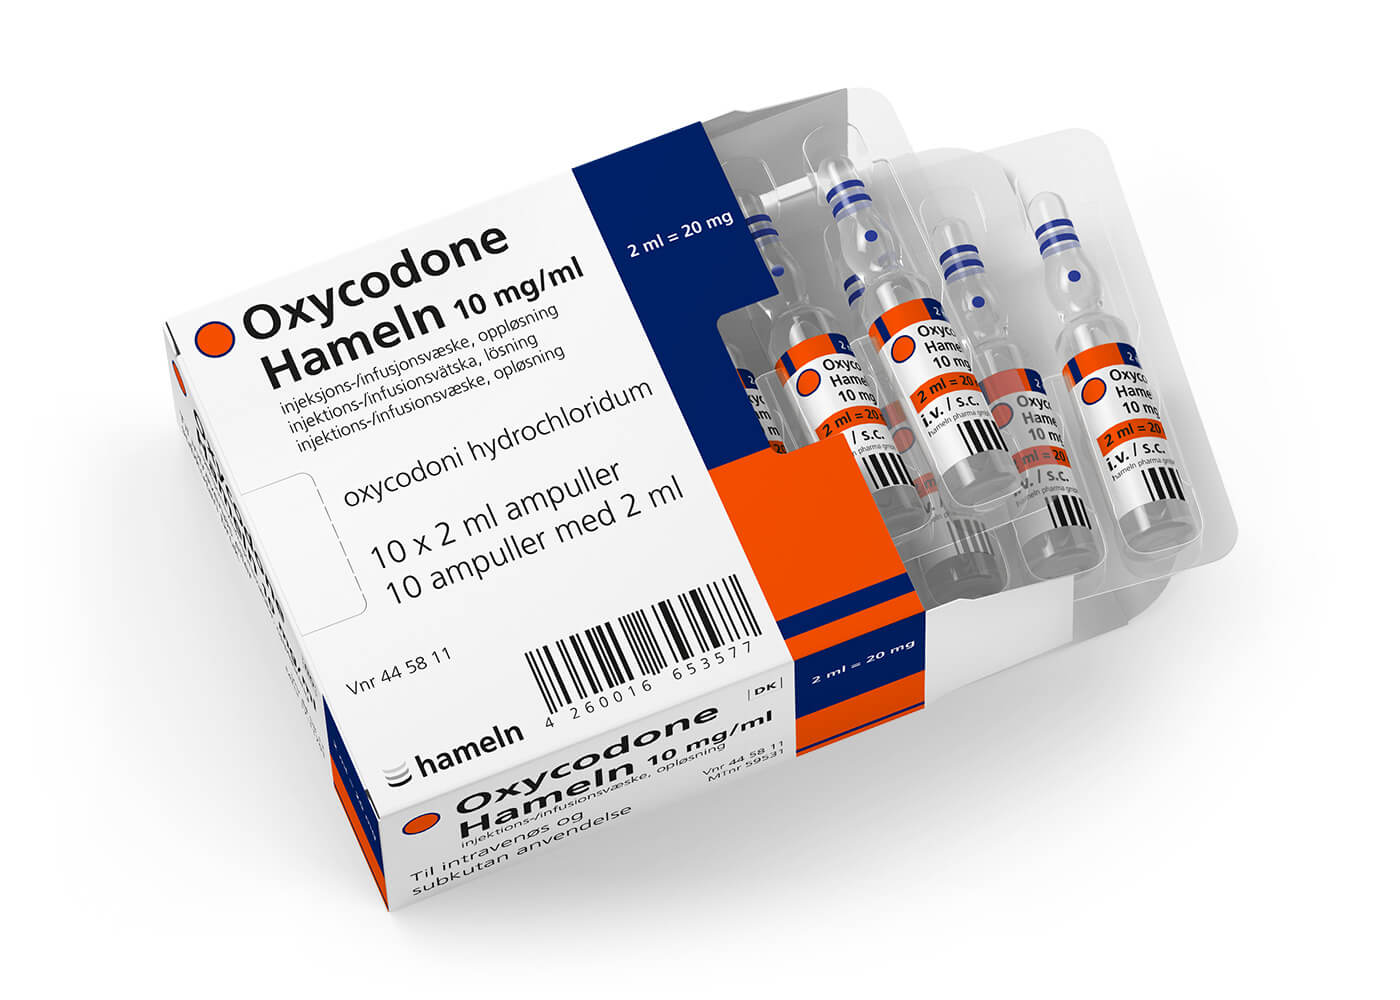 Oxycodon_NO-DK_10_mg-ml_in_2_ml_Pack-Amp_10St_Hemo_2022-37